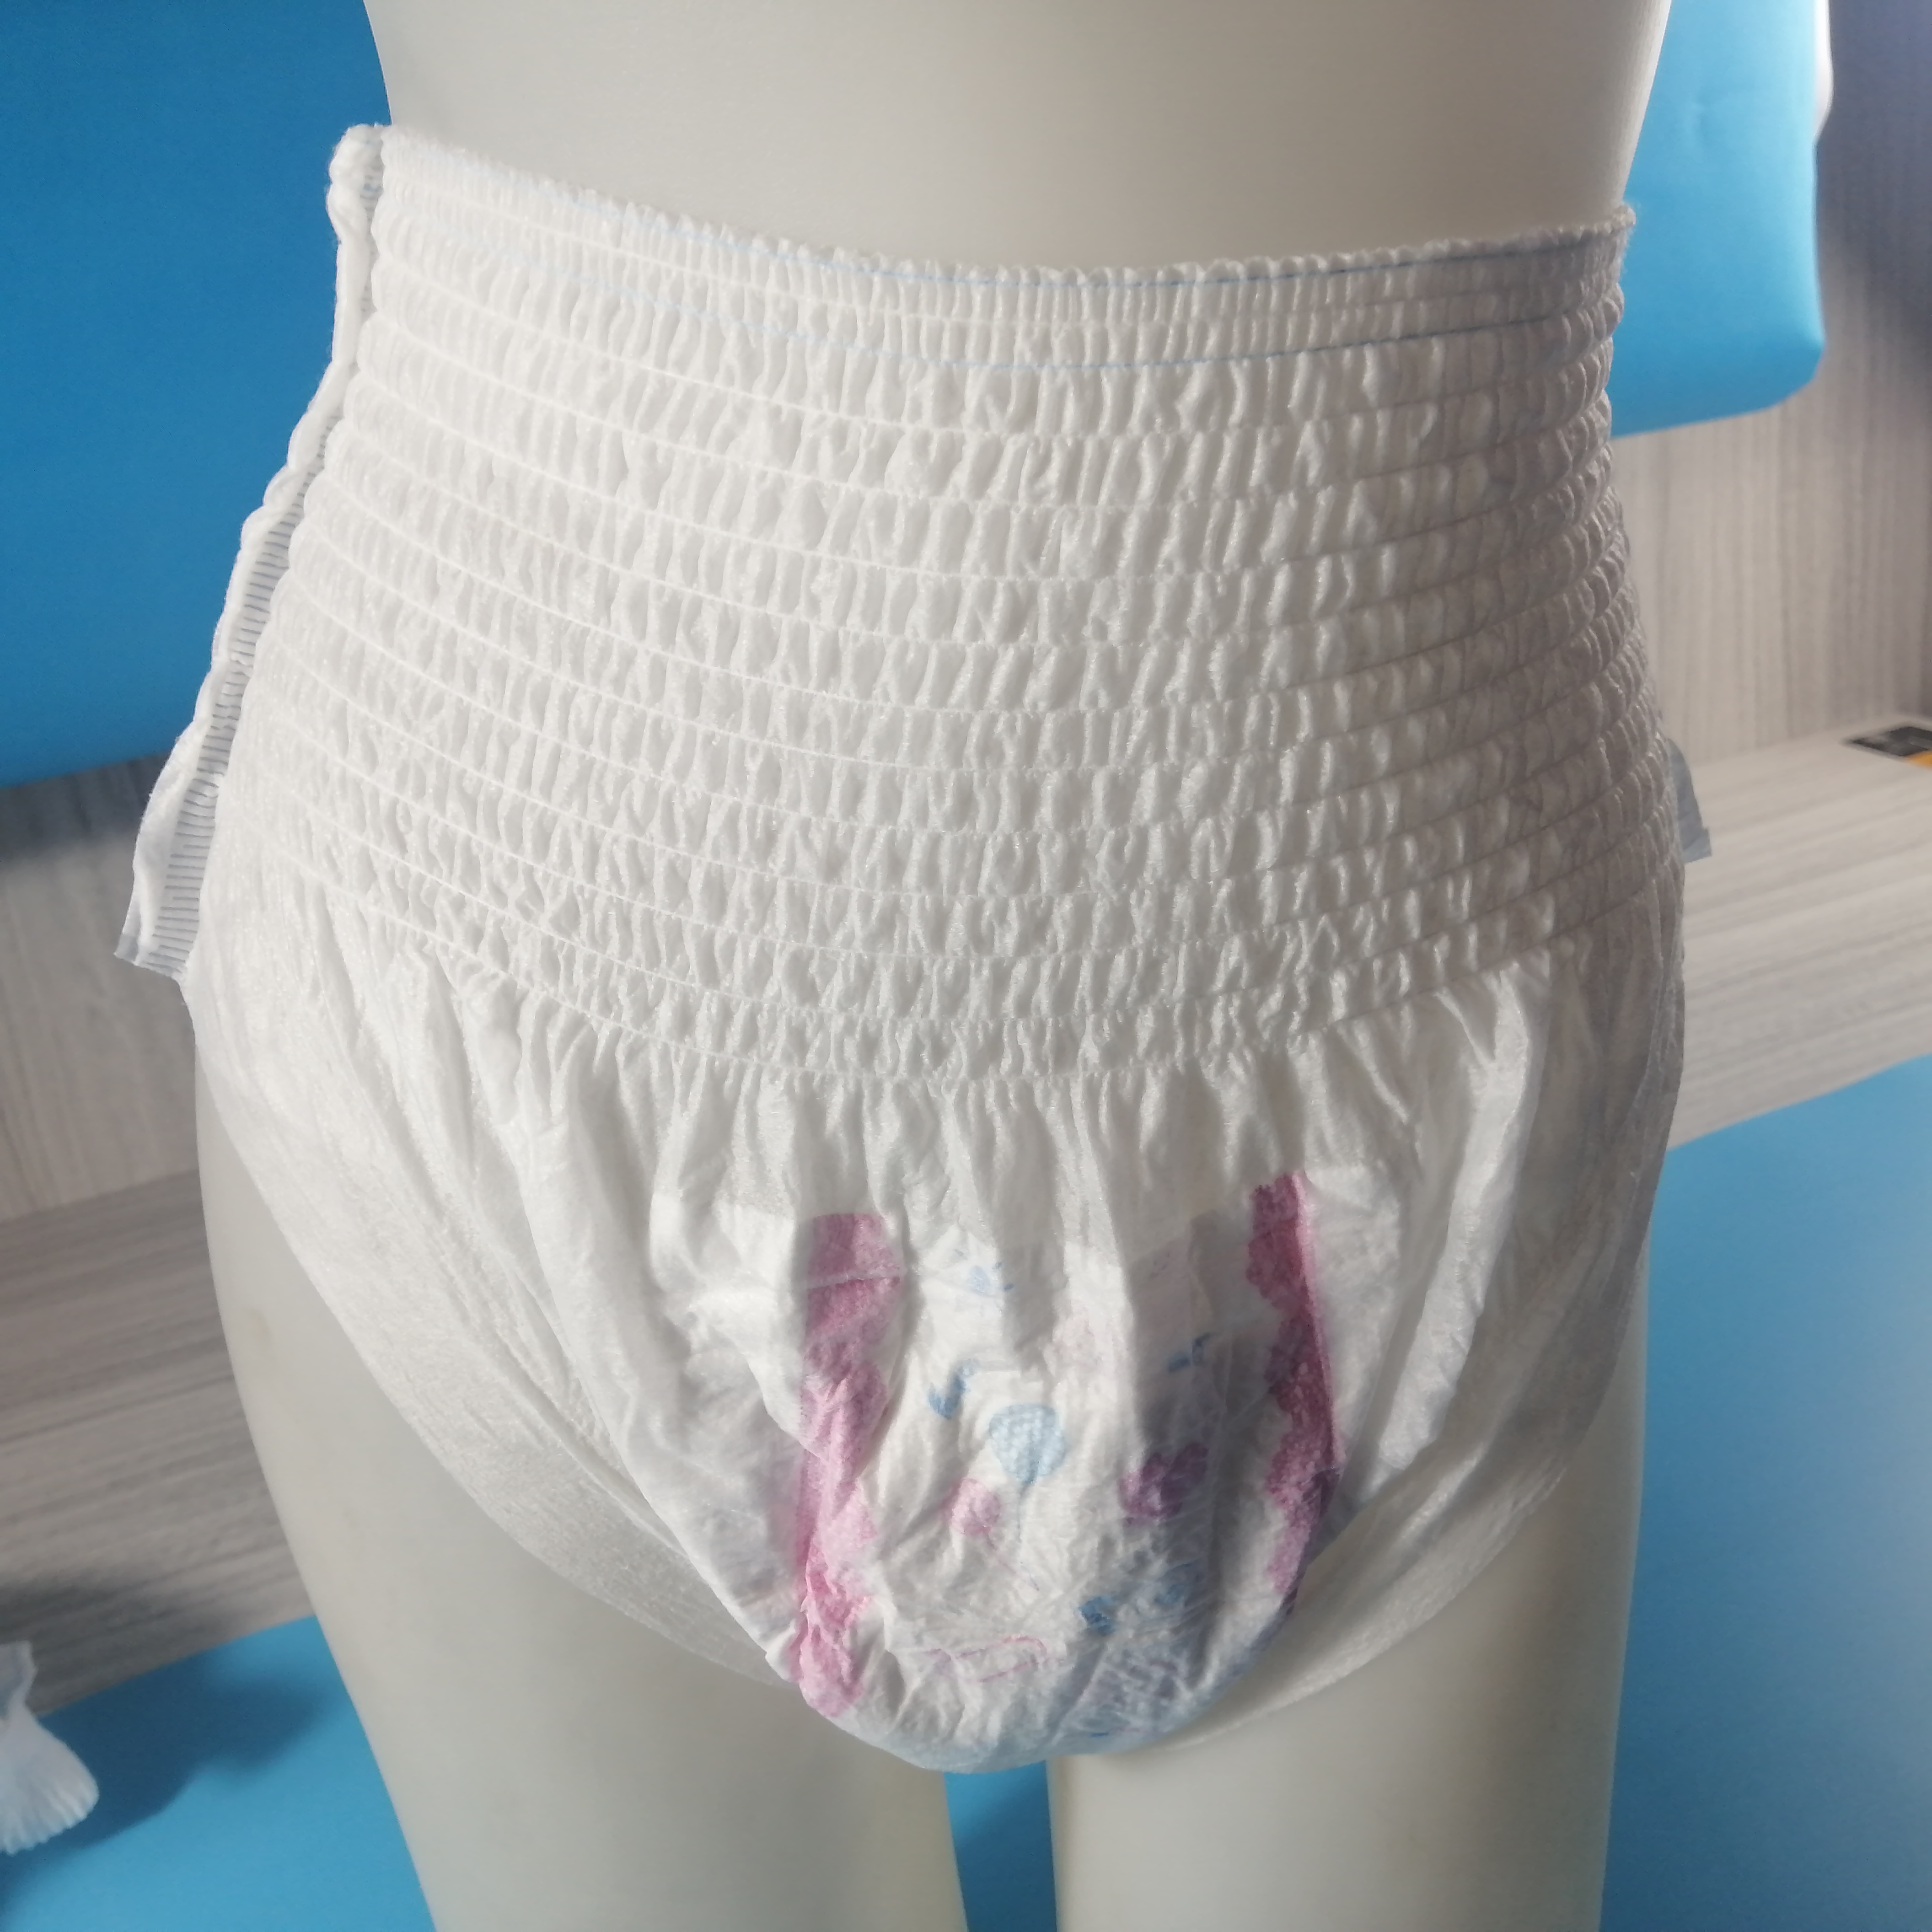 China High Quality Sanitary Napkin Panty type Carefree female